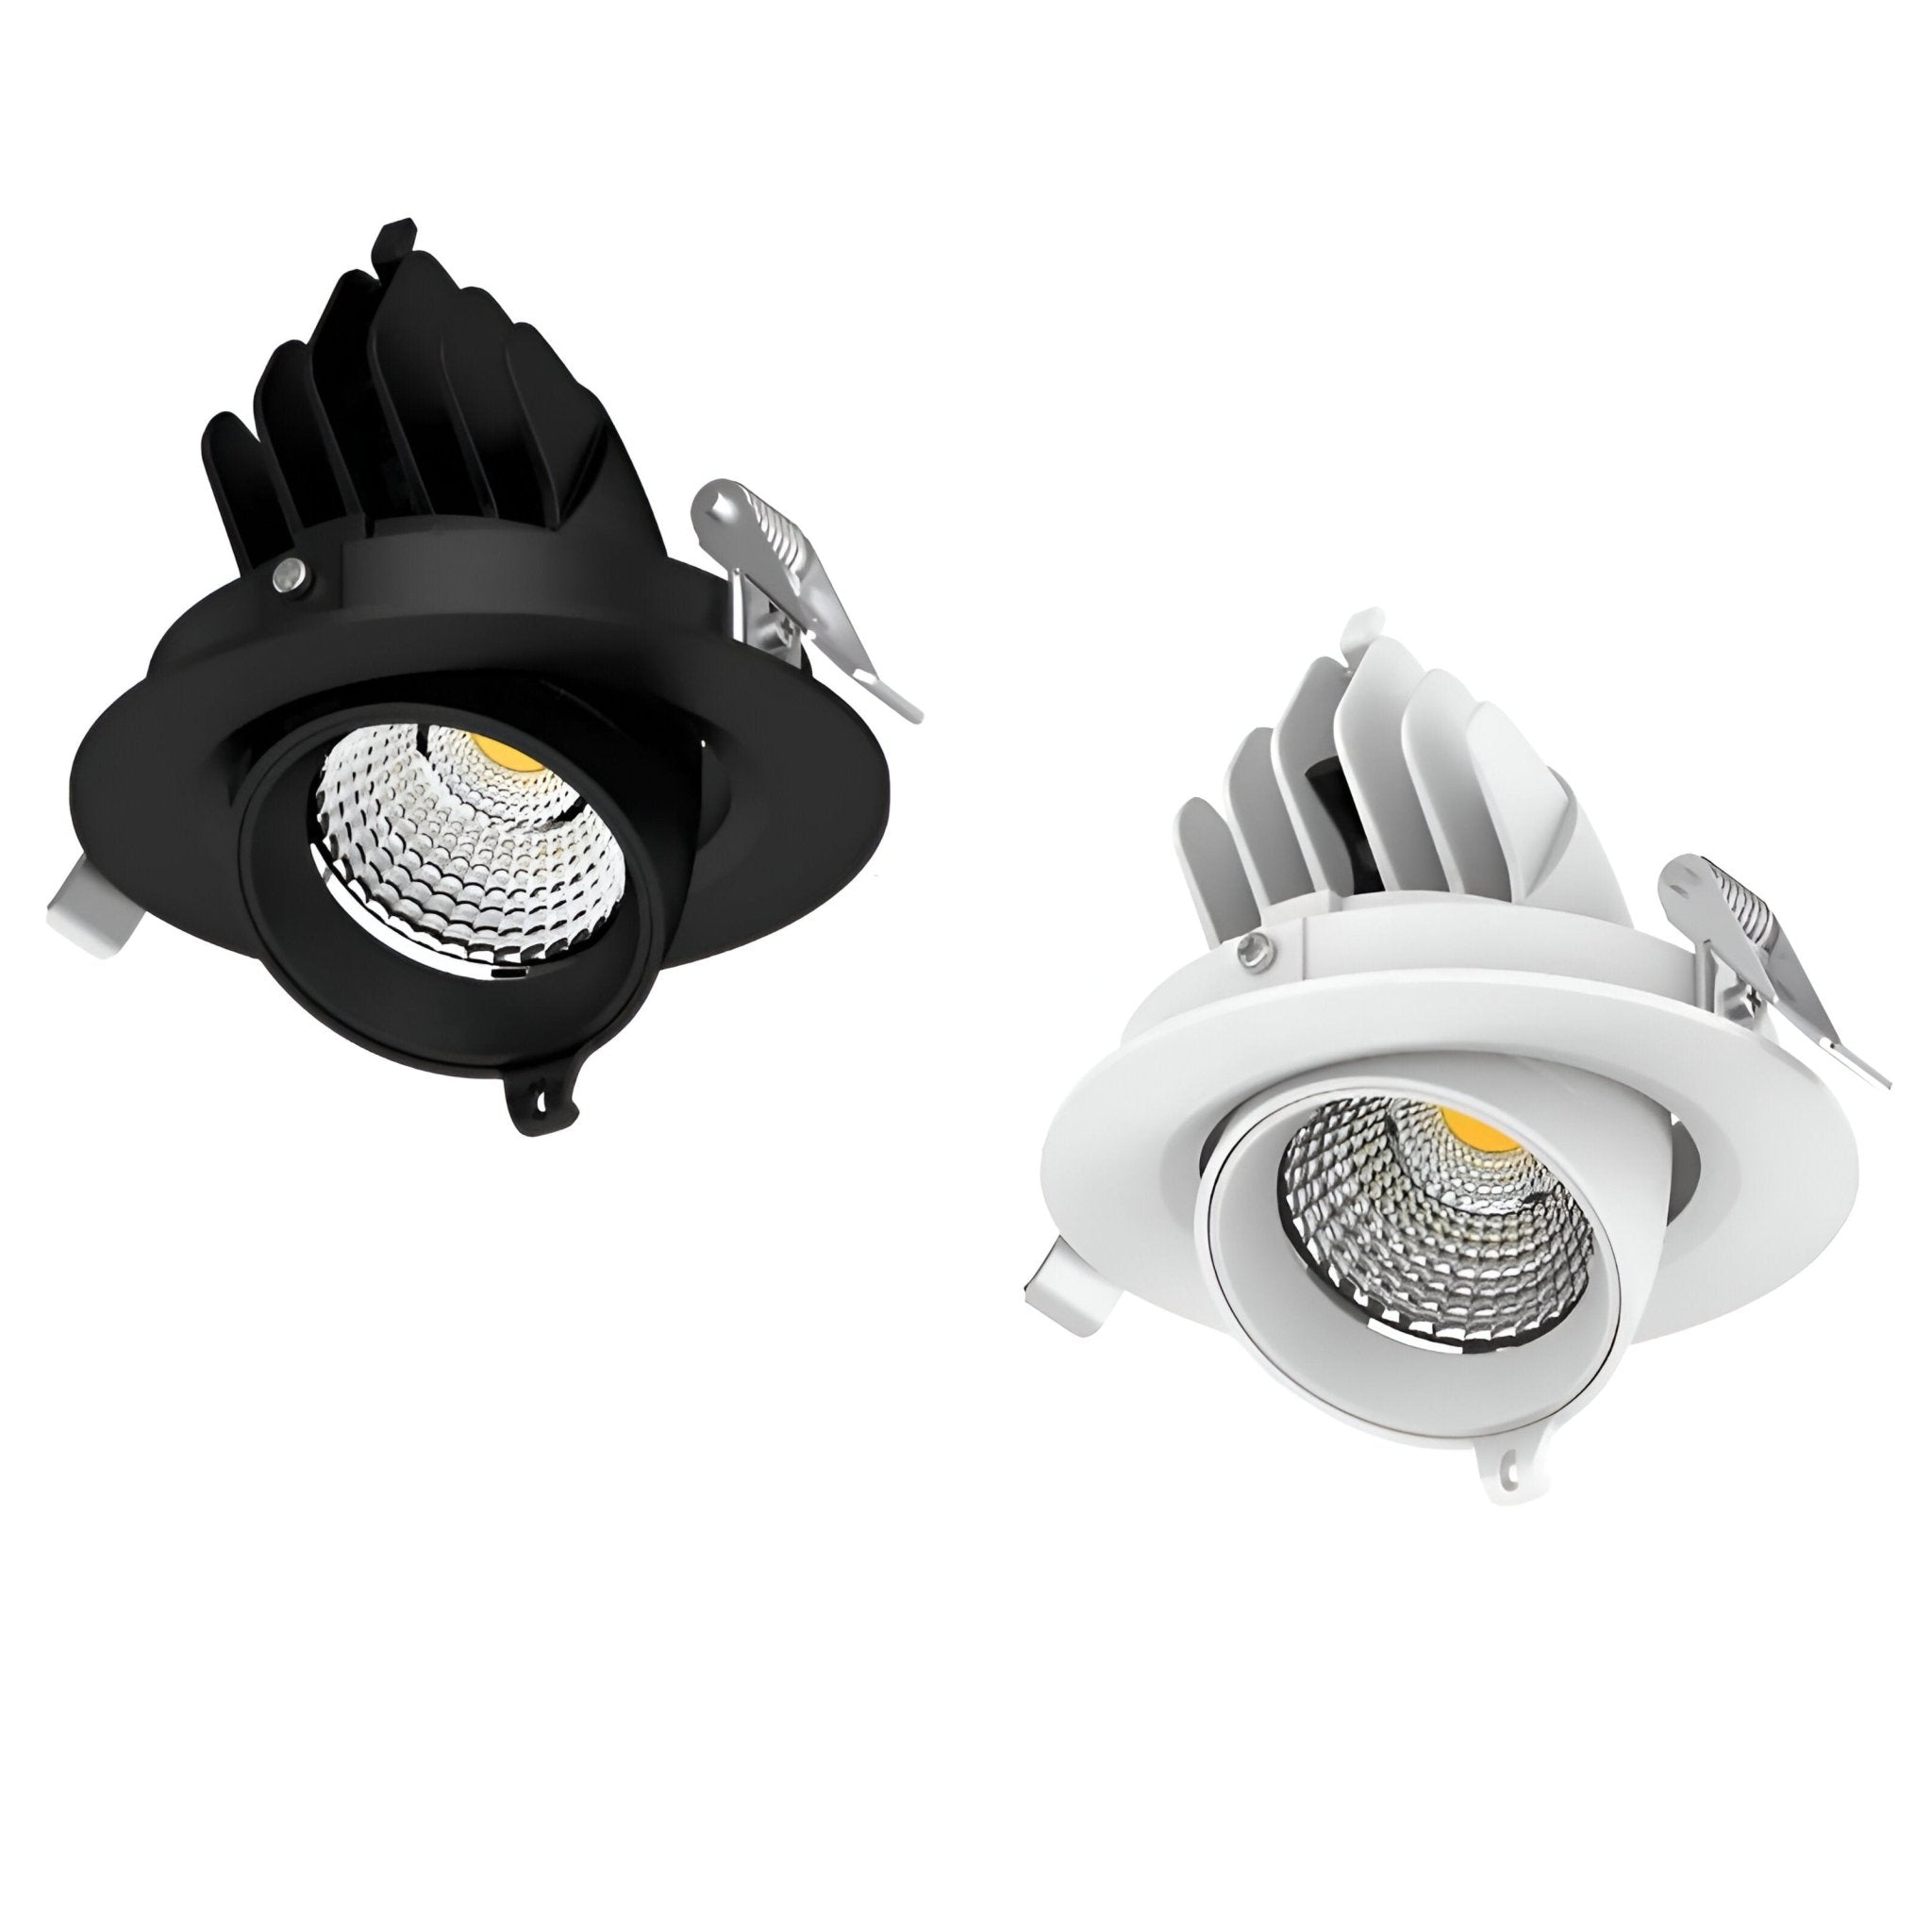 Domus SCOOP-13 Round 13W Adjustable LED Dimmable Downlight- Black/White - Mases LightingDomus